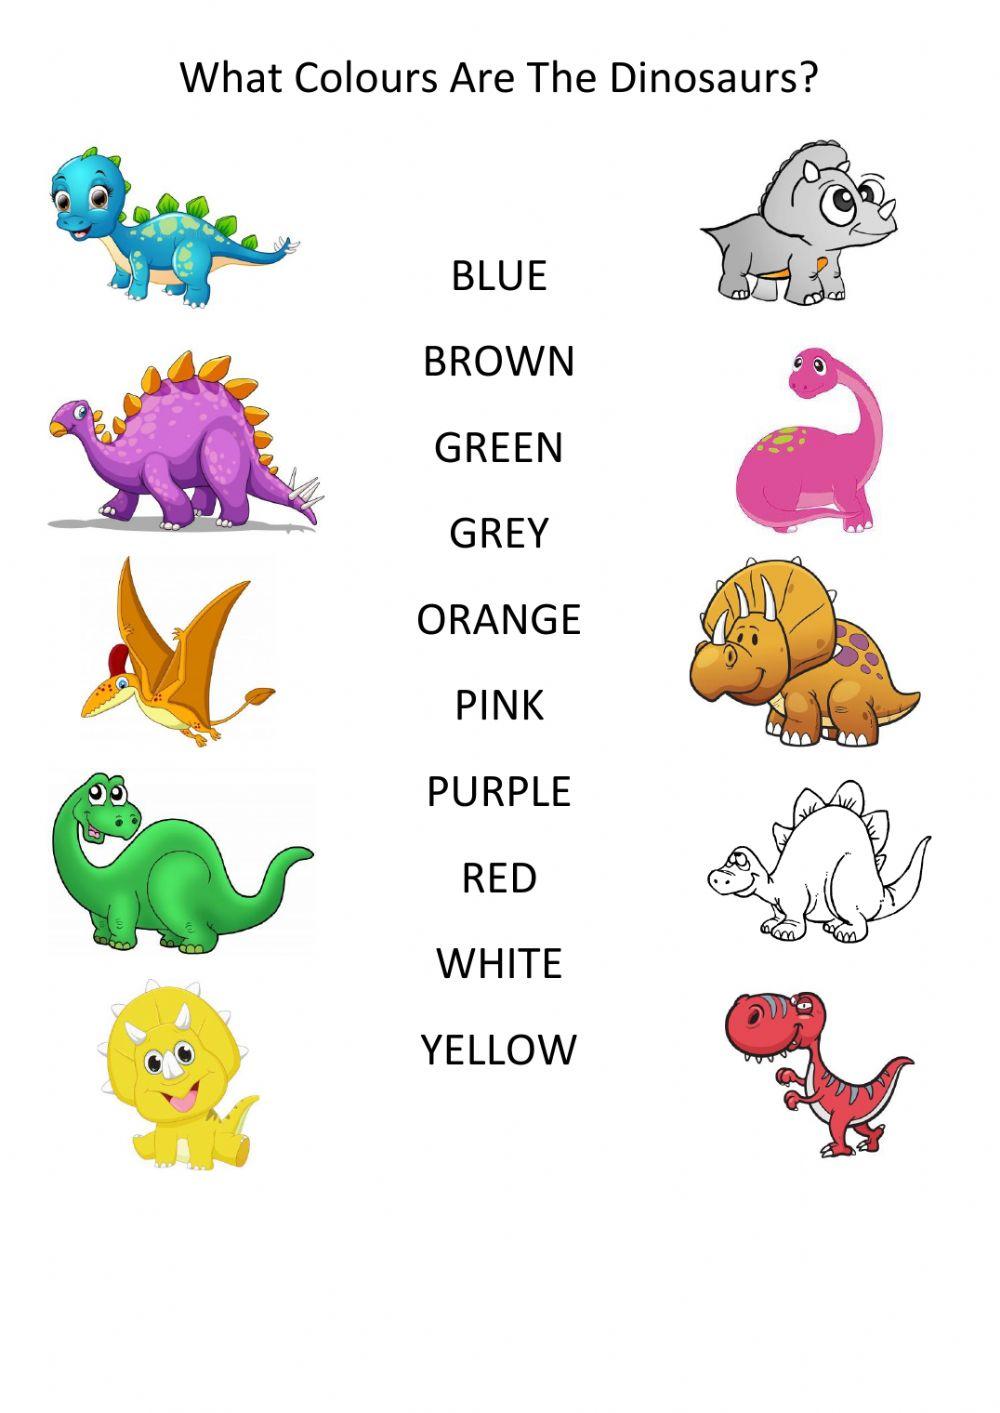 Colours & Dinosaurs